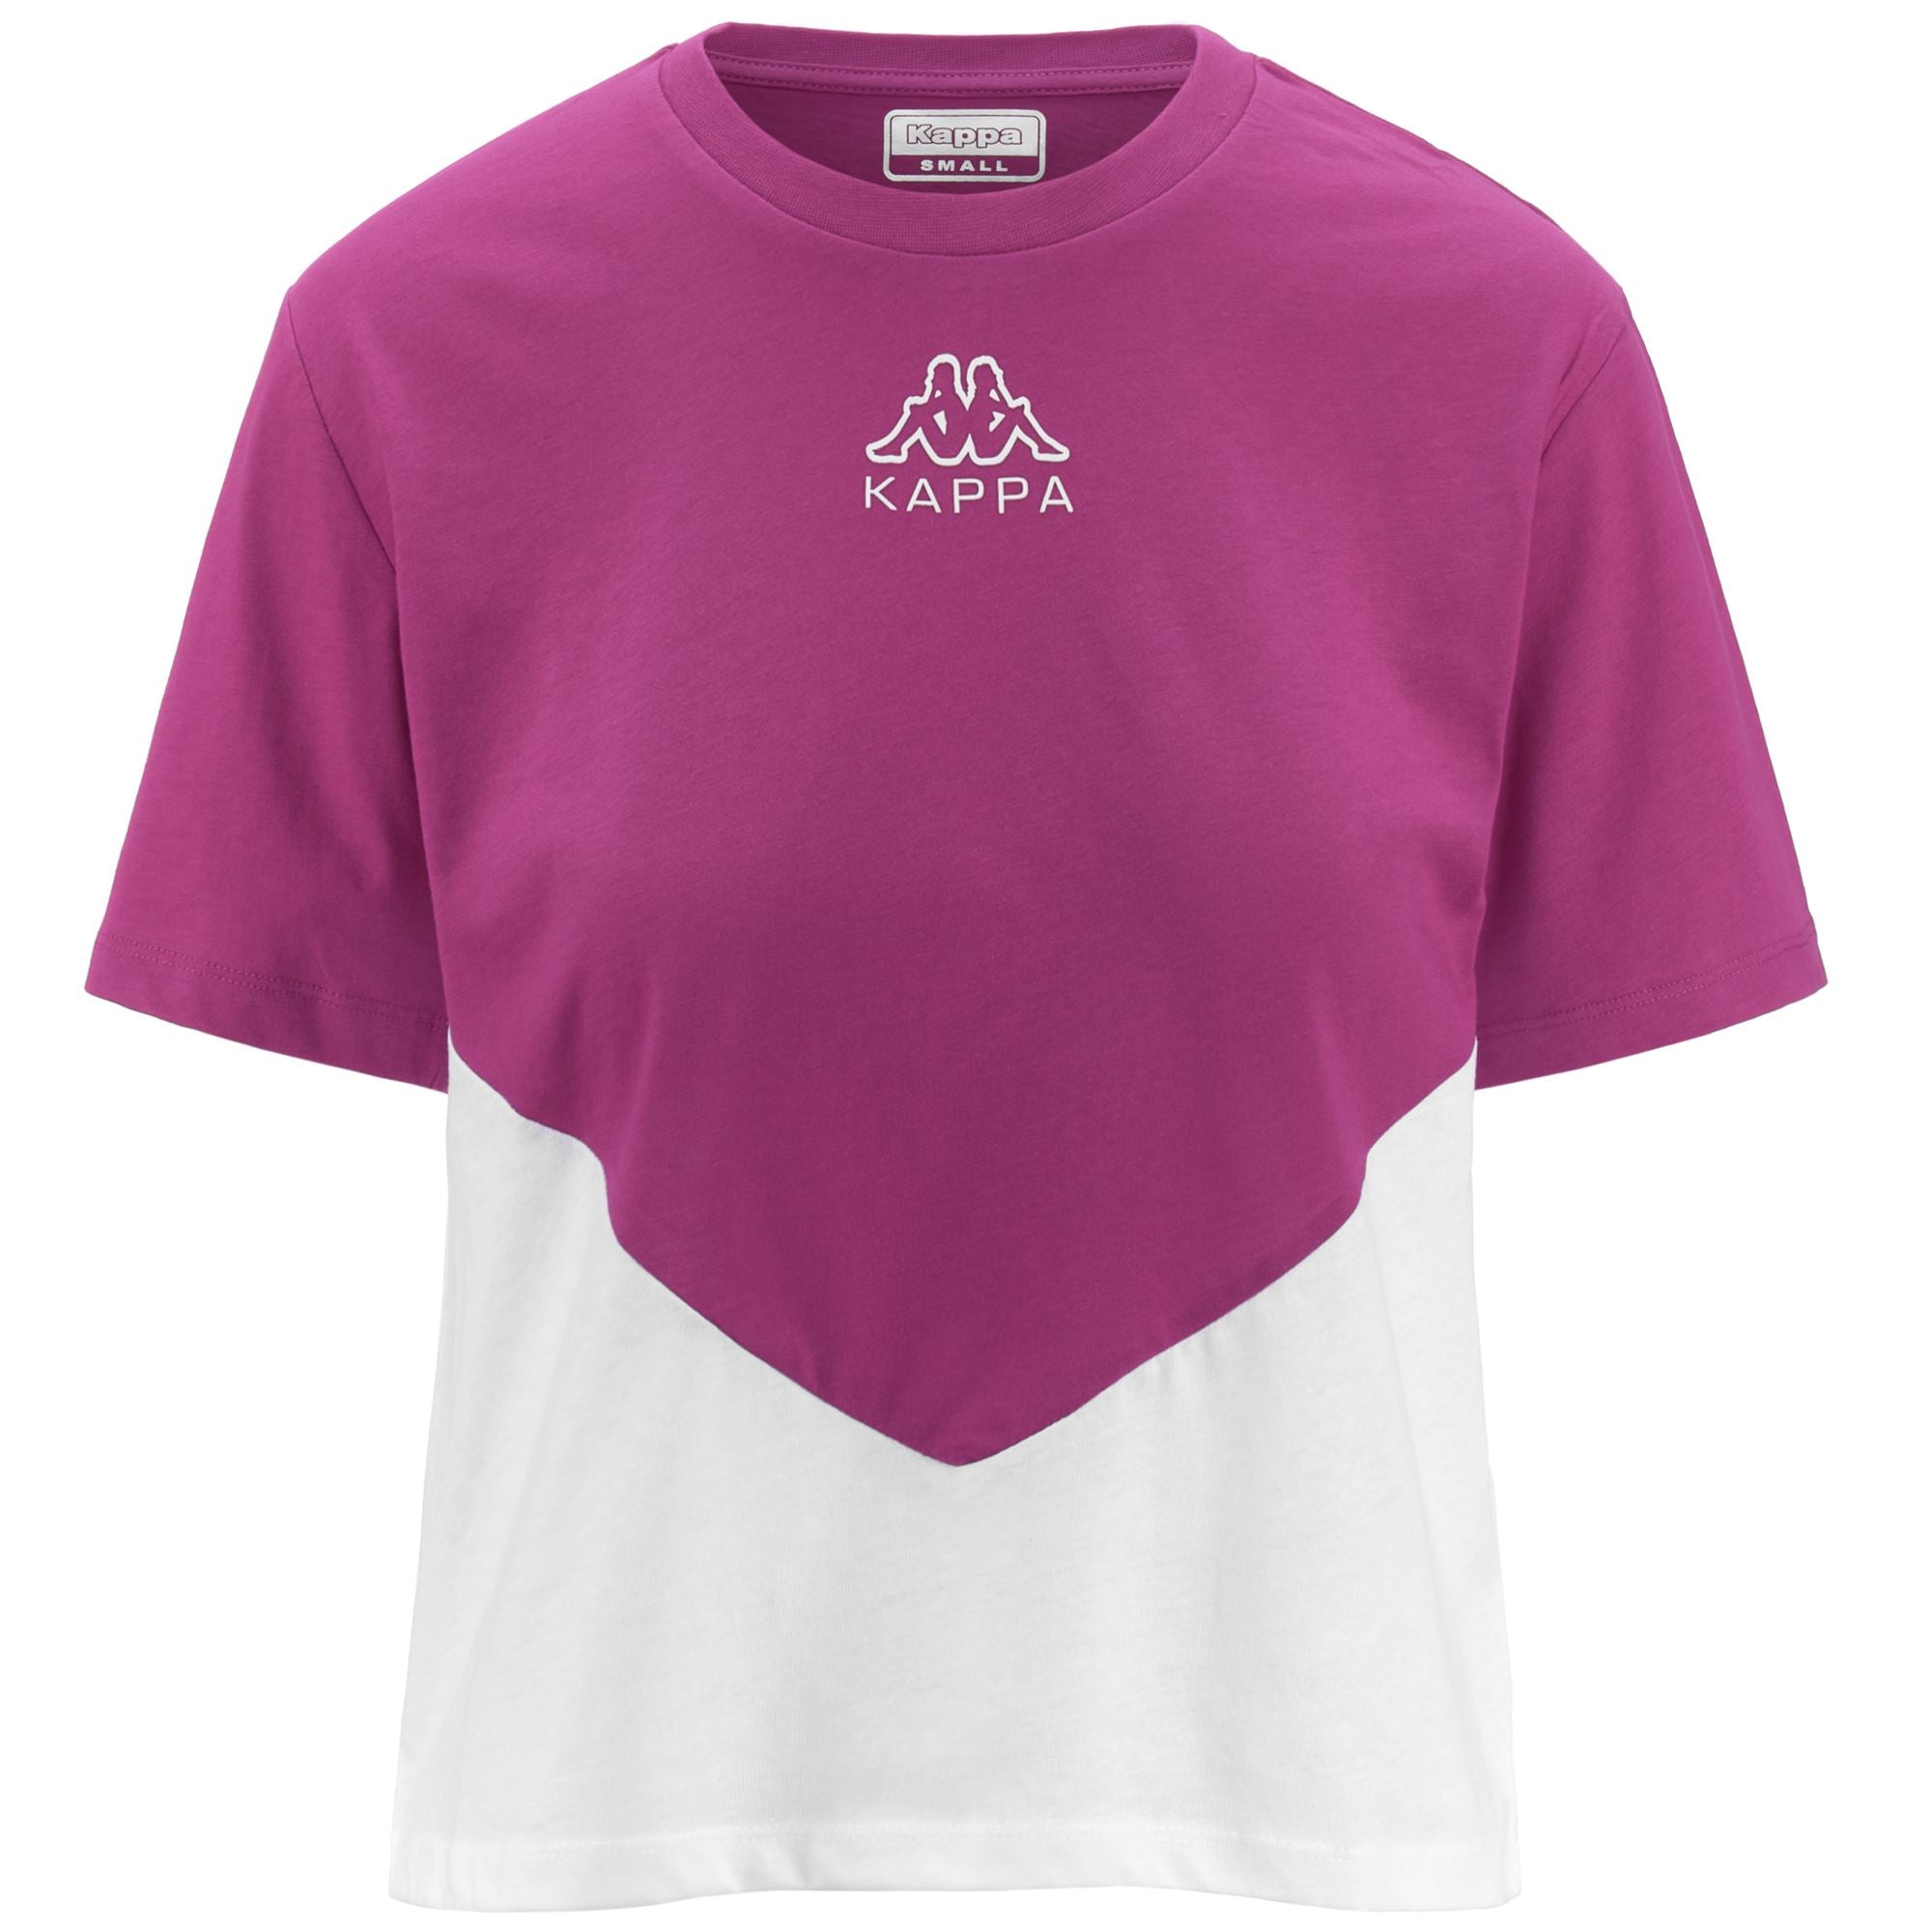 Kappa - Kappa - Camisetas y tops, Camisa - Mujer - logo ece